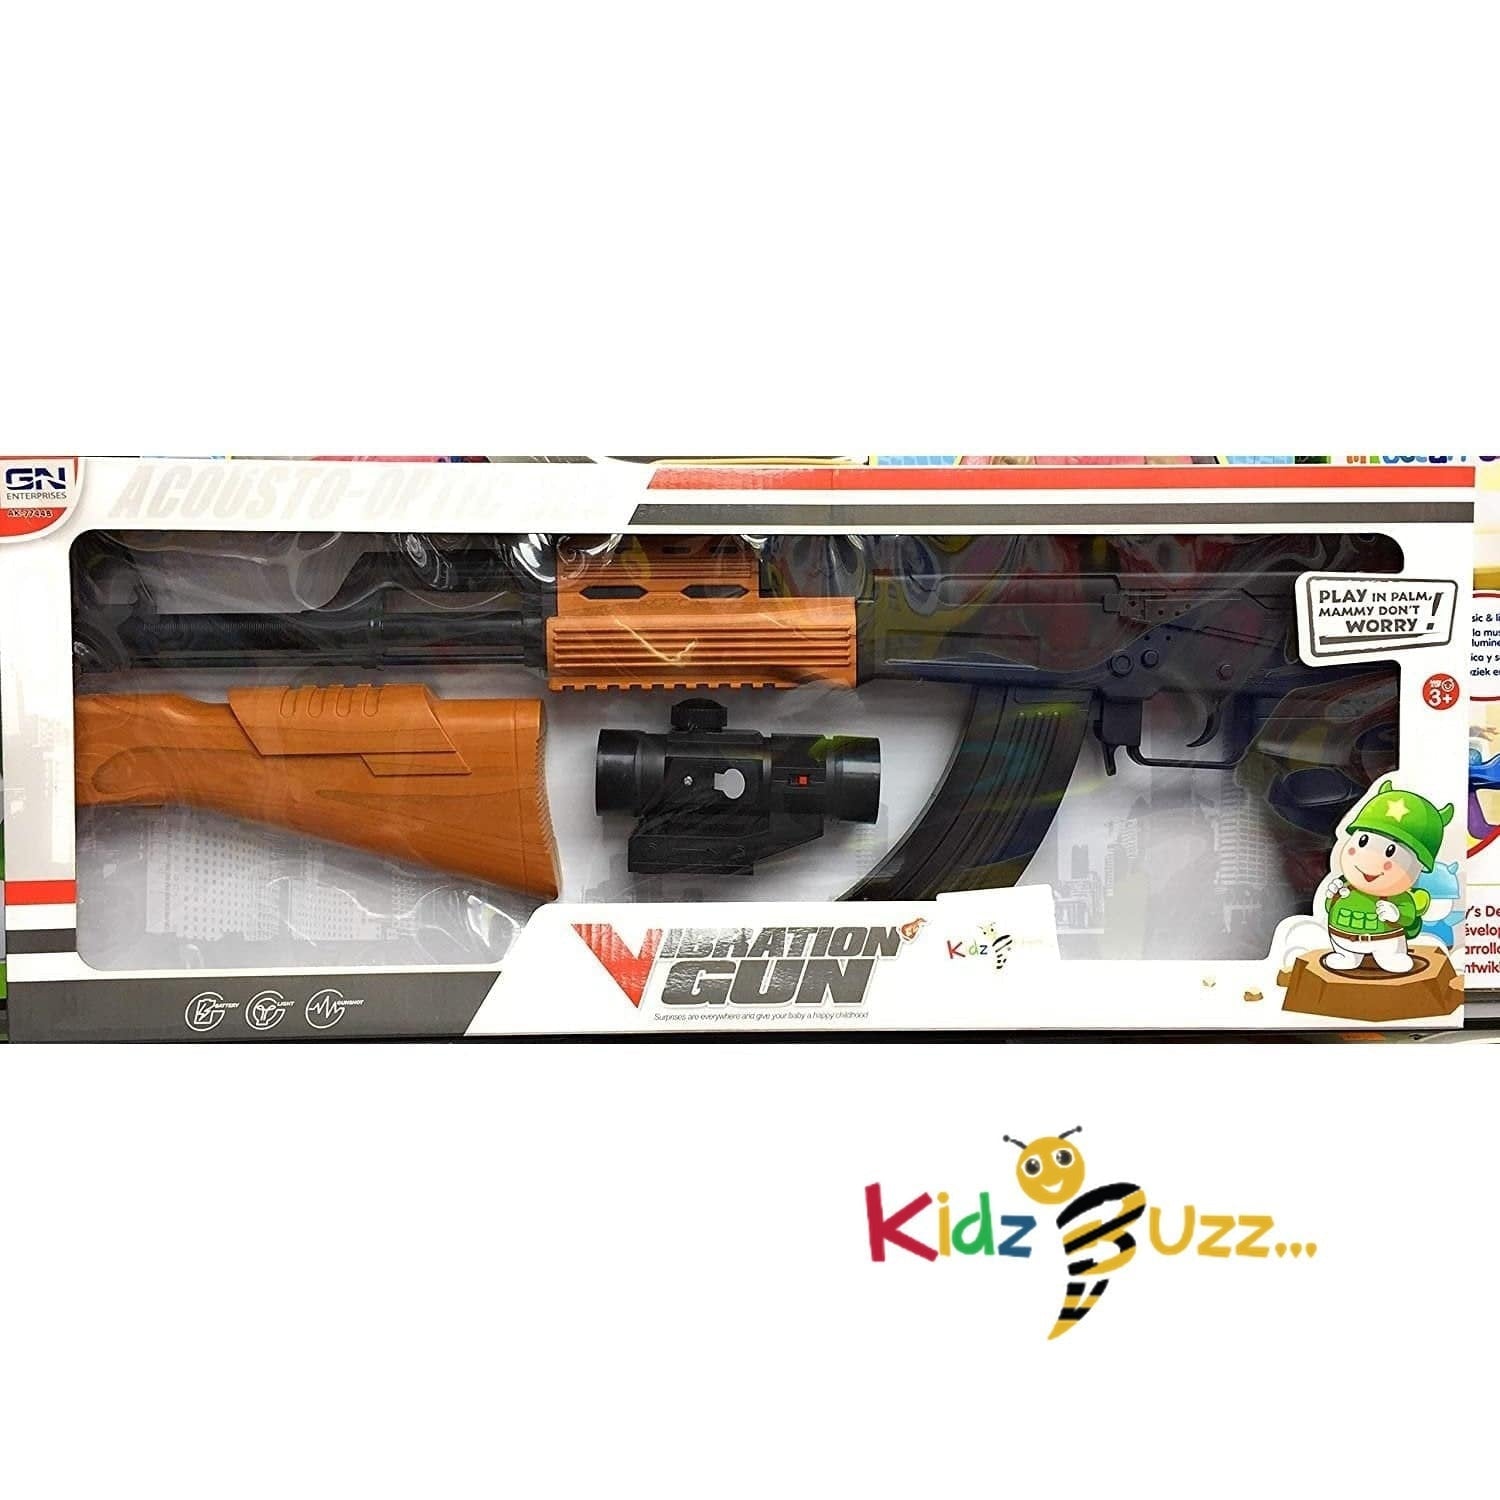 Kids Toy Gun AK-47 with Vibration, Sound , Flashing and Telescope